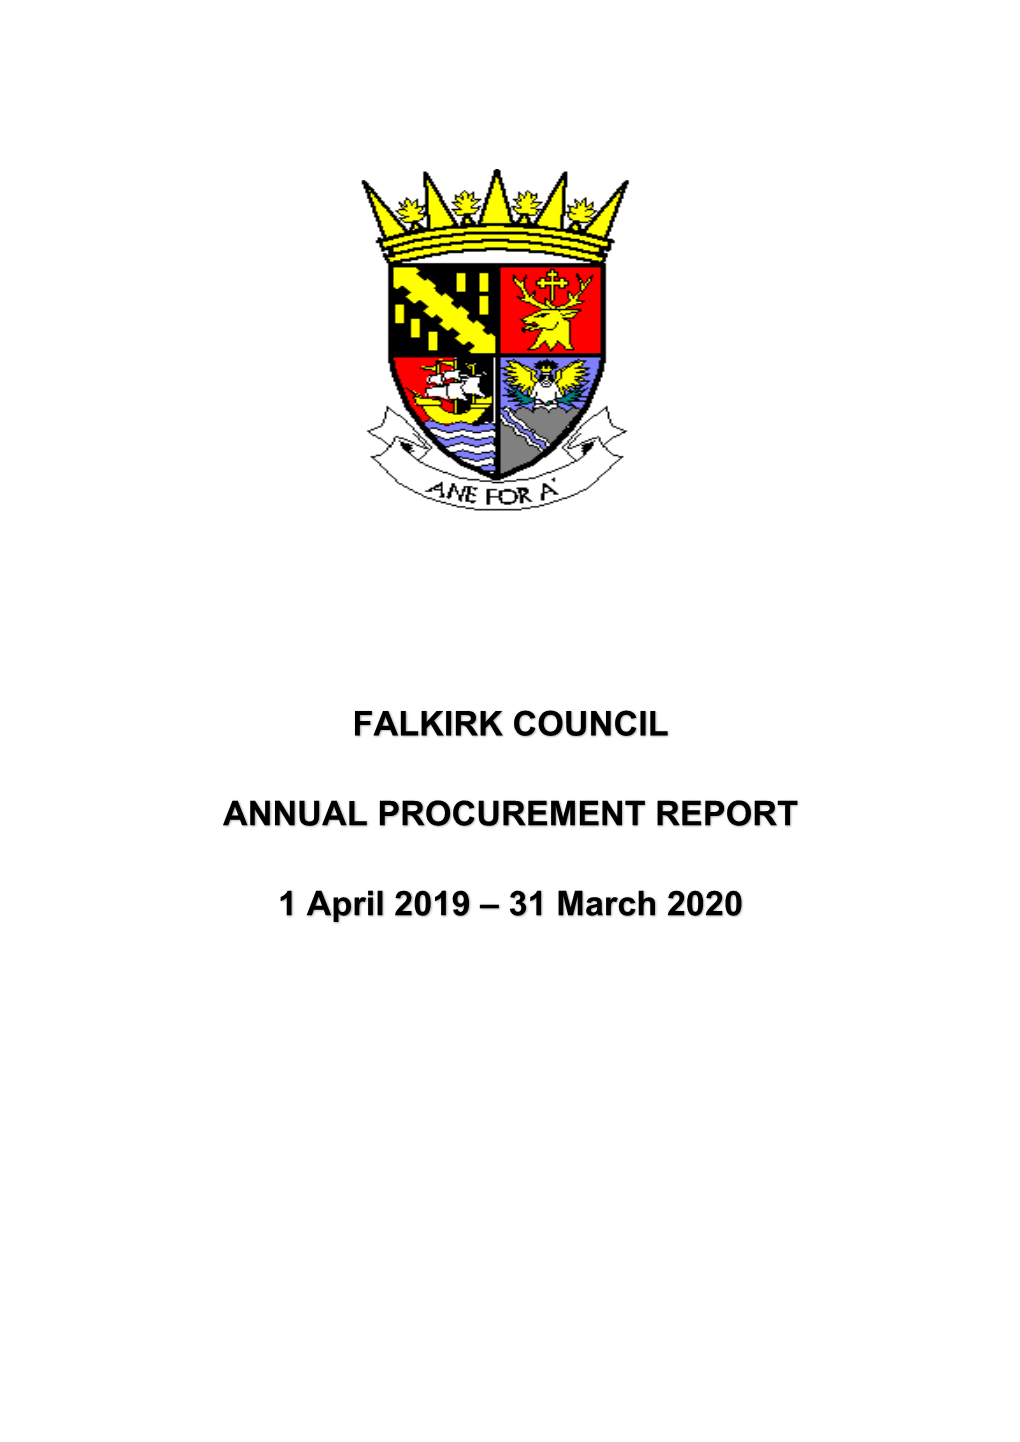 Annual Procurement Report 2019 to 2020